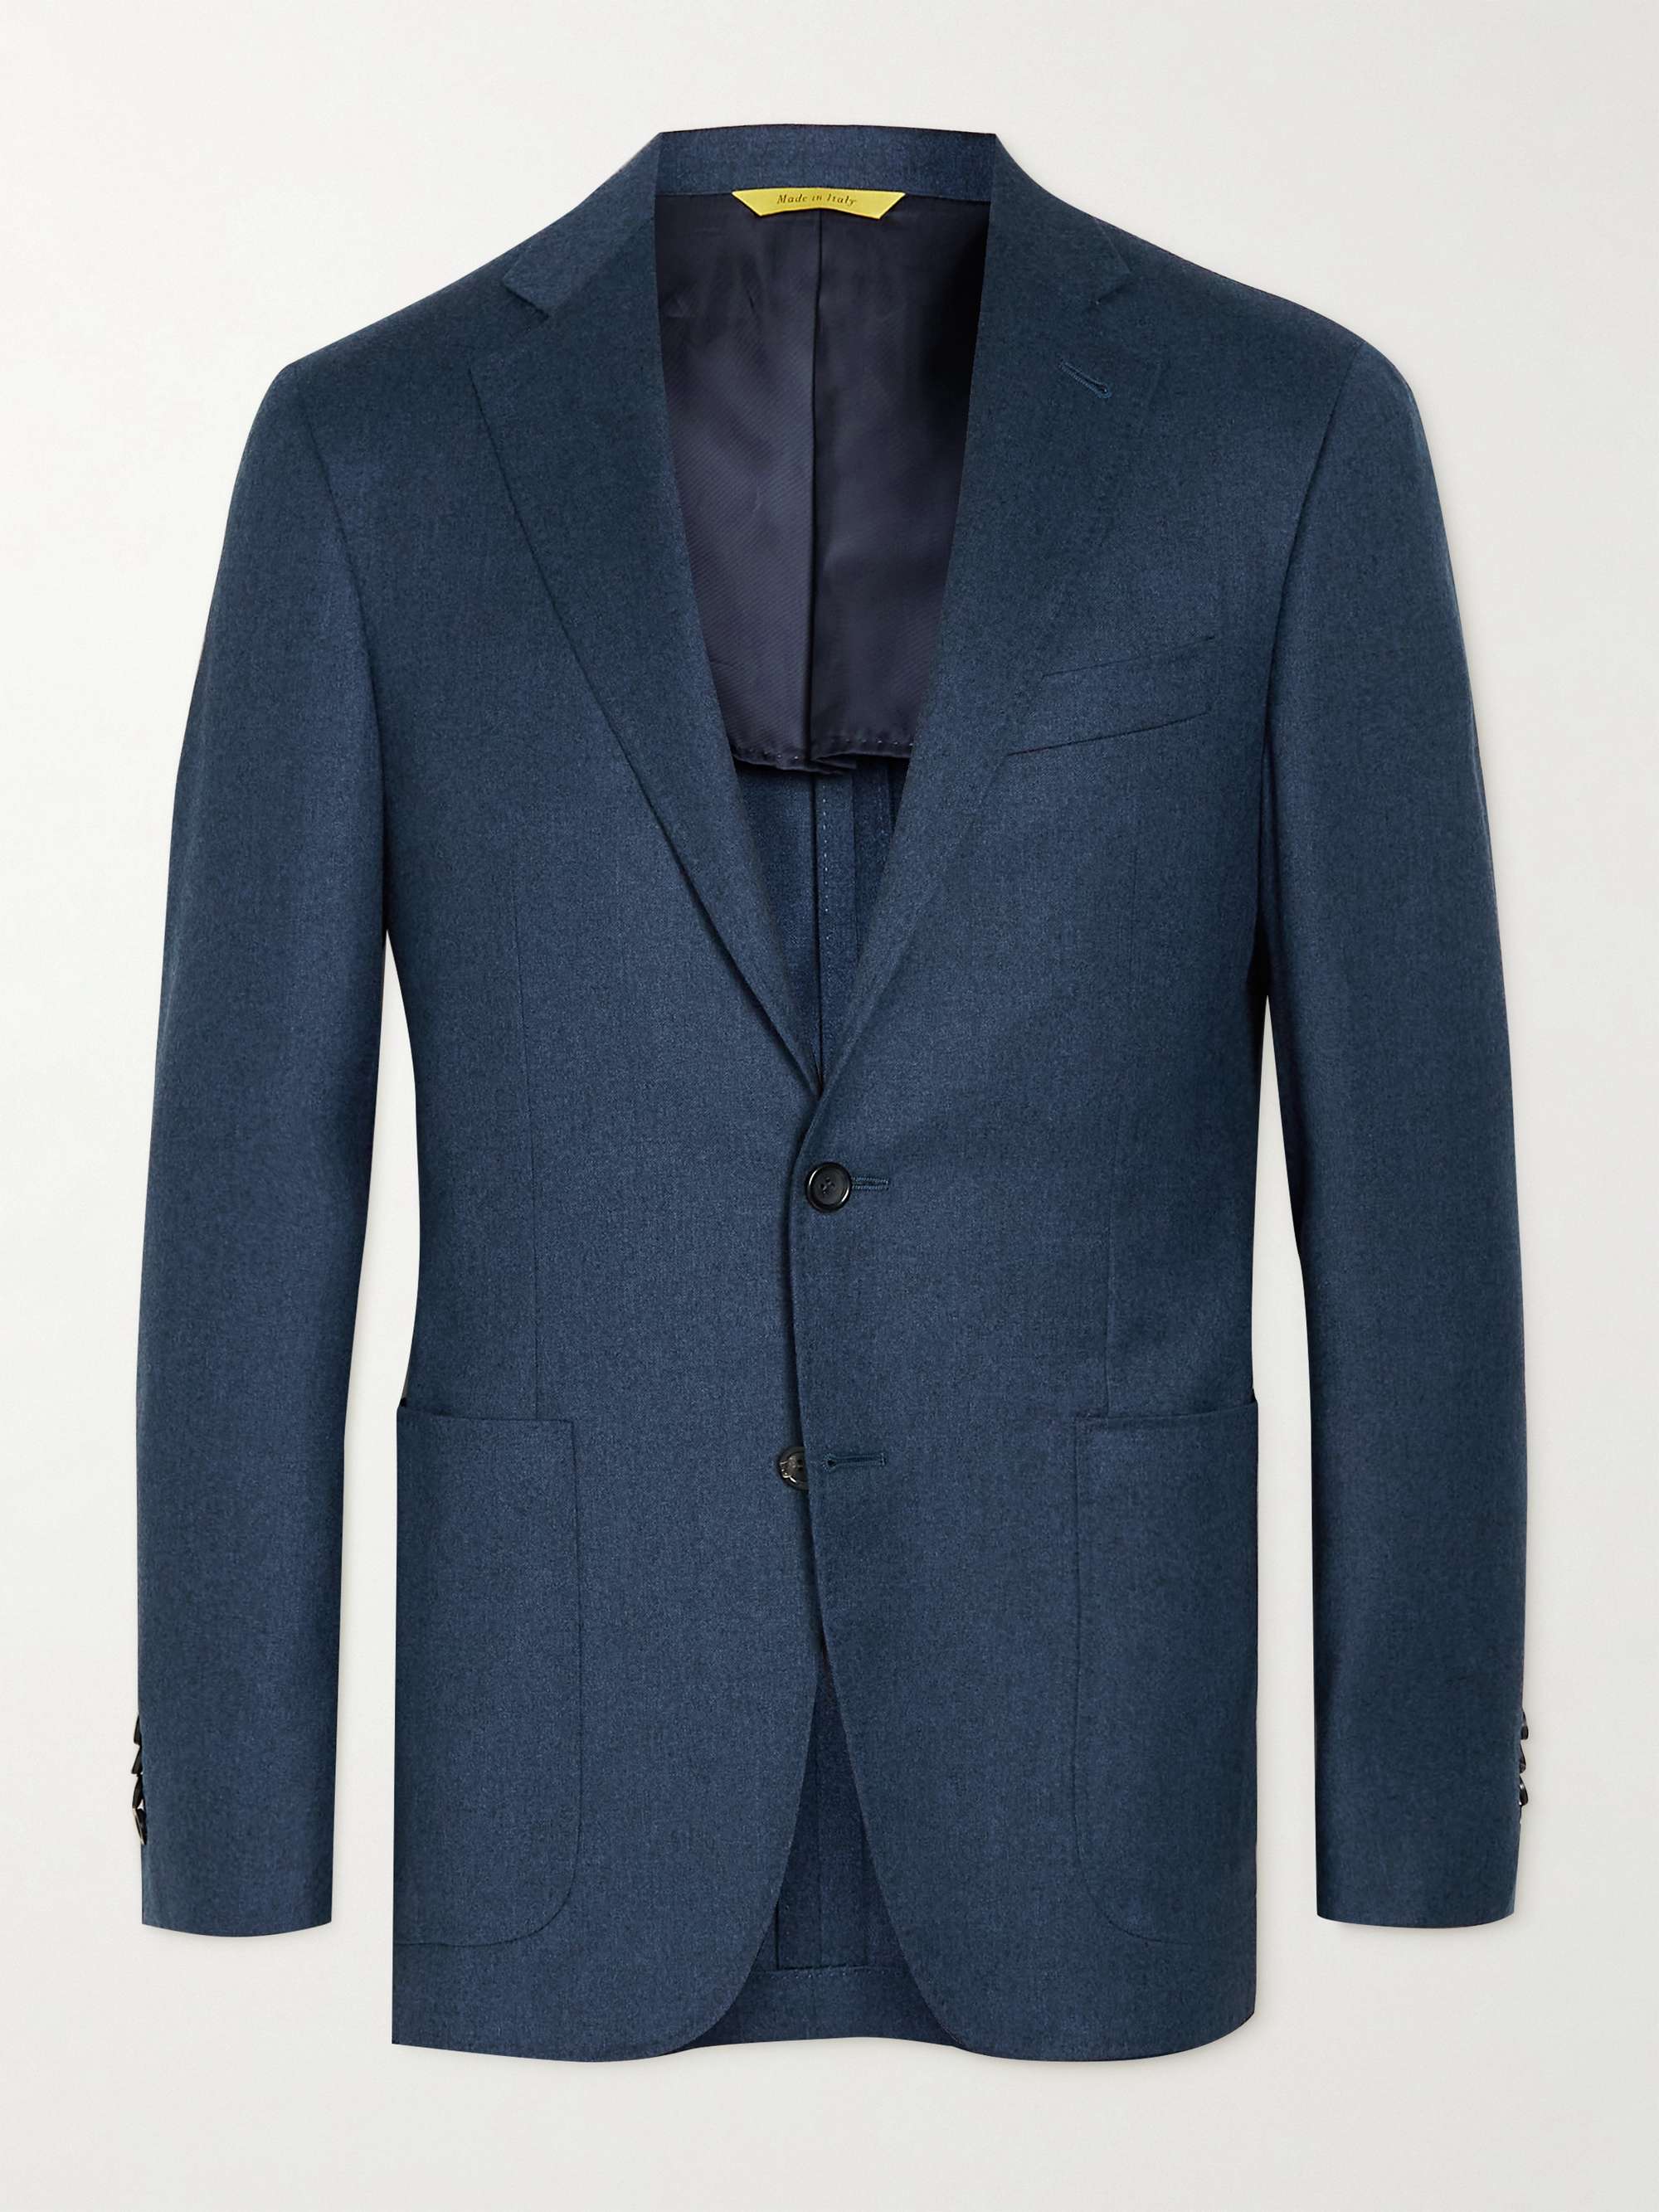 Luxurious Wool Feel 5 Button Suit 37" jacket W center back split design #2908 